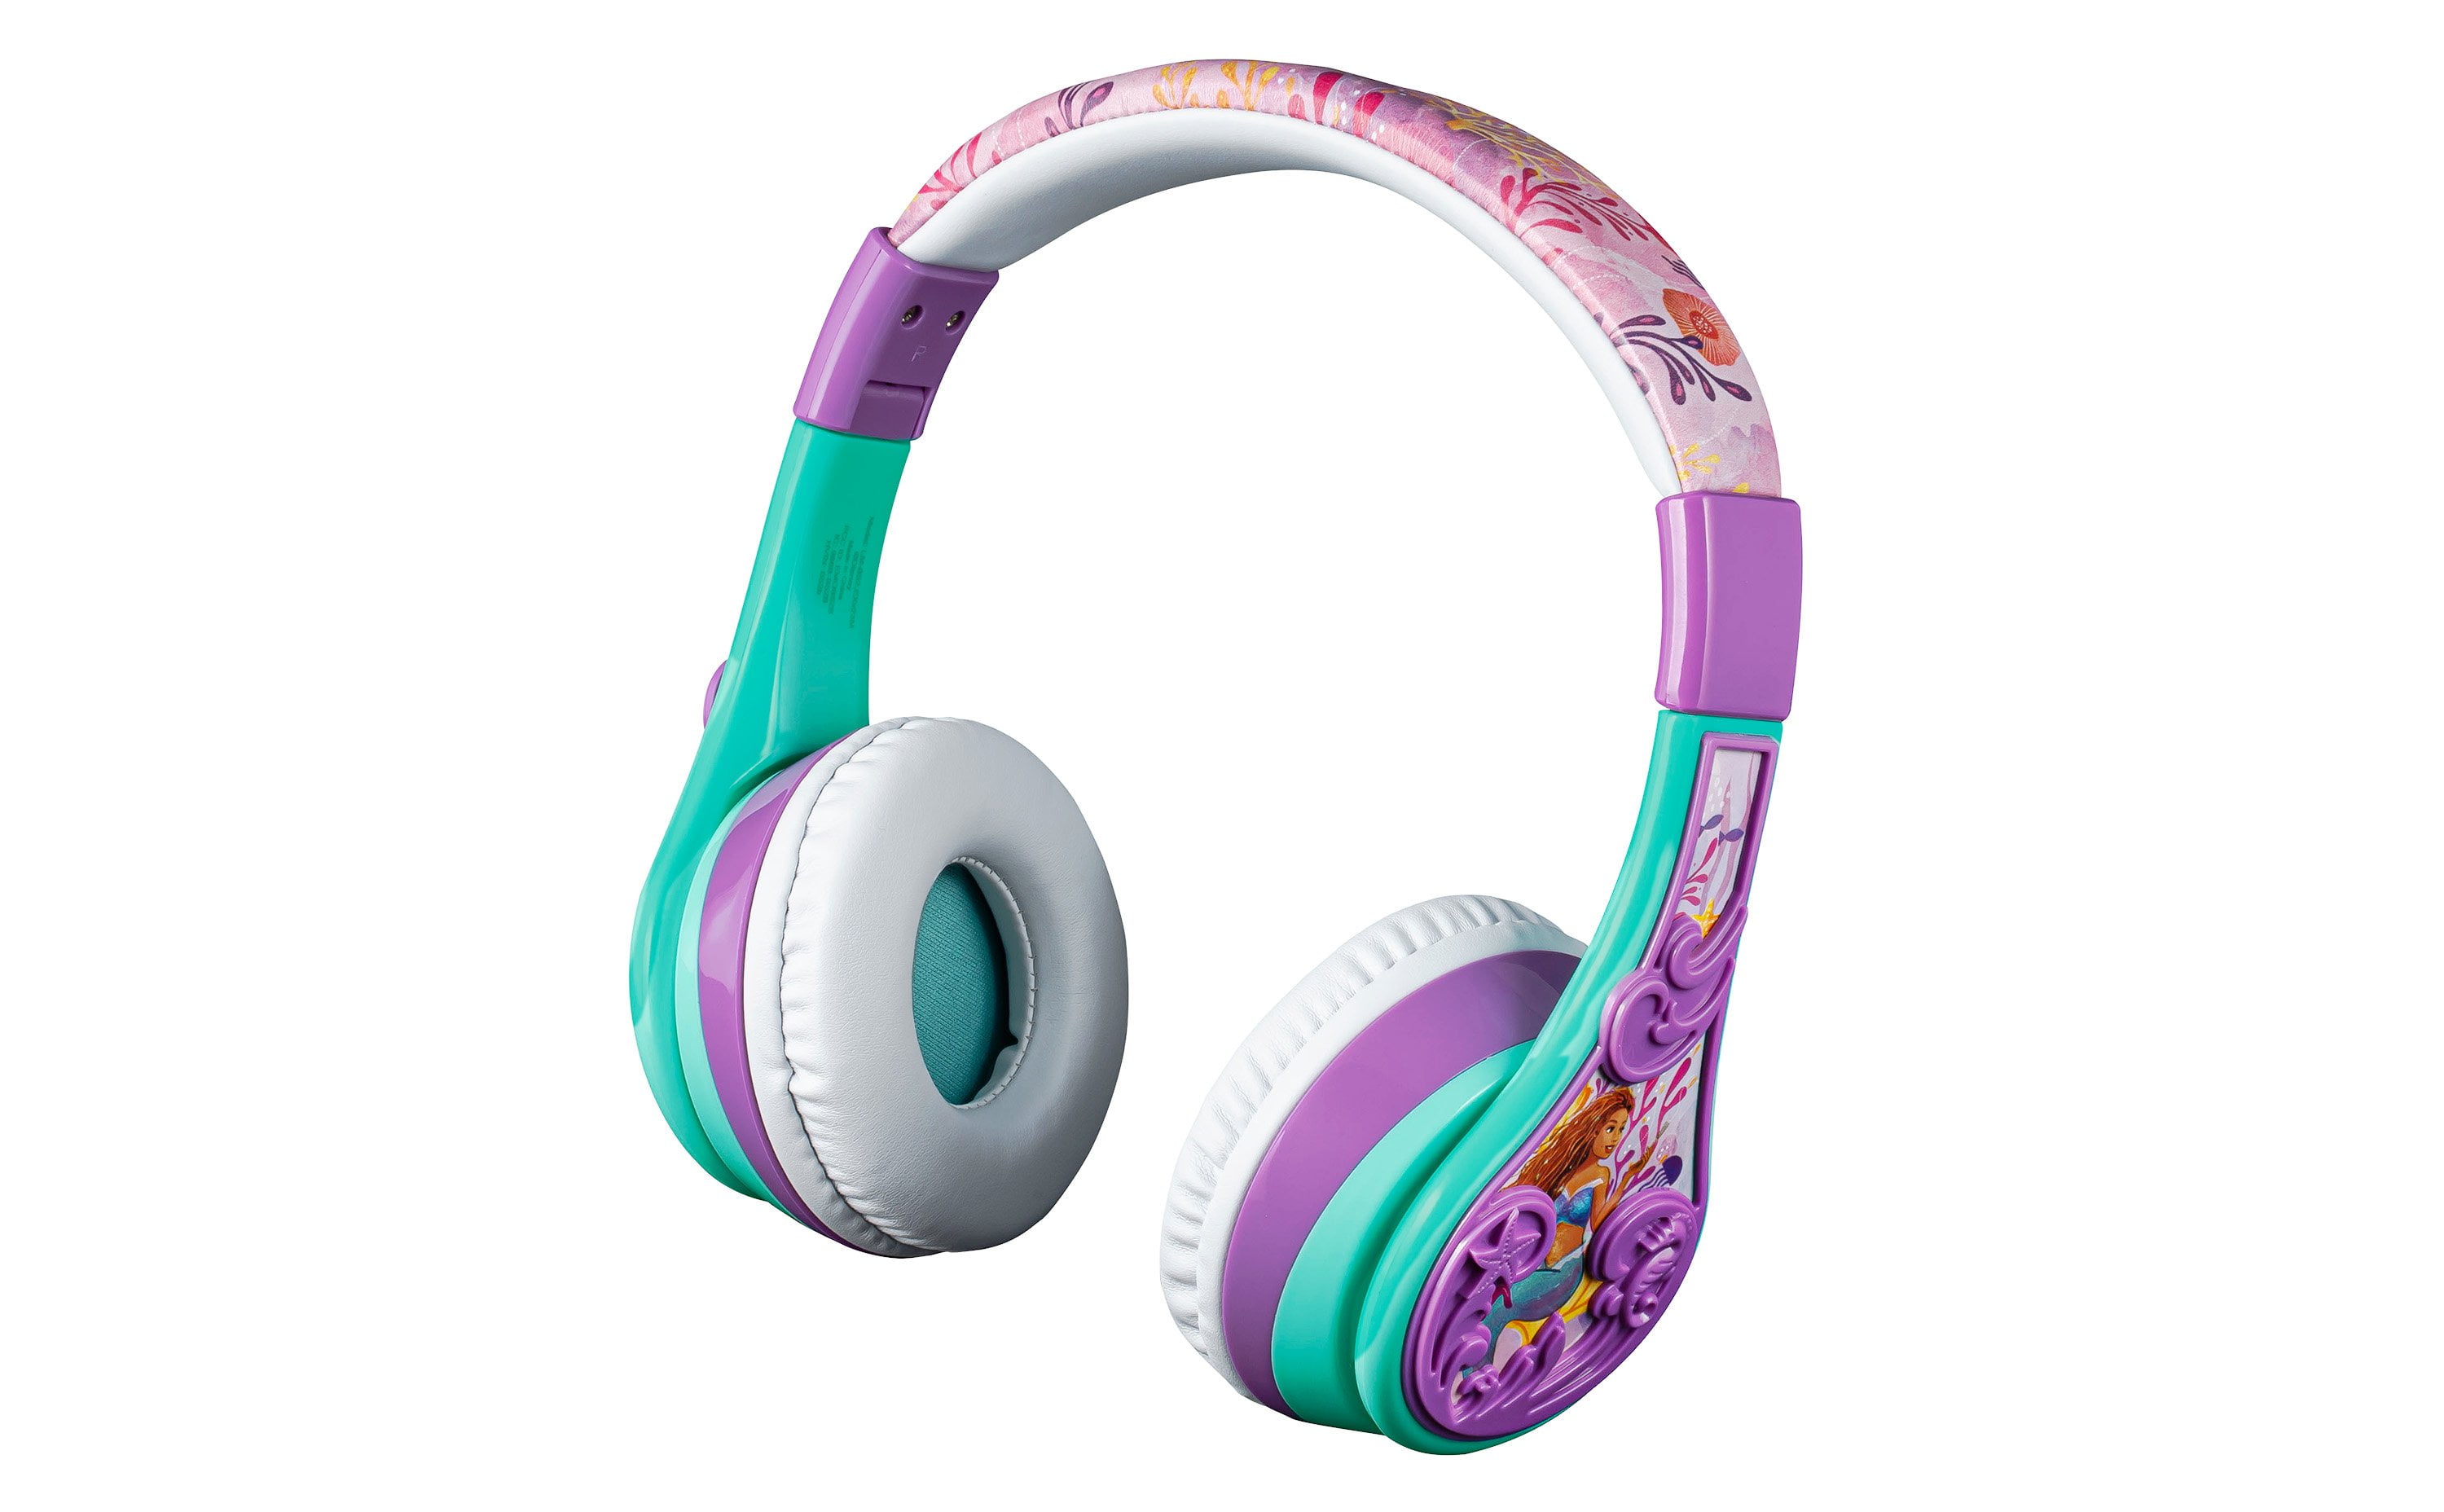 eKids The Little Mermaid Bluetooth Headphones for Kids, Wireless